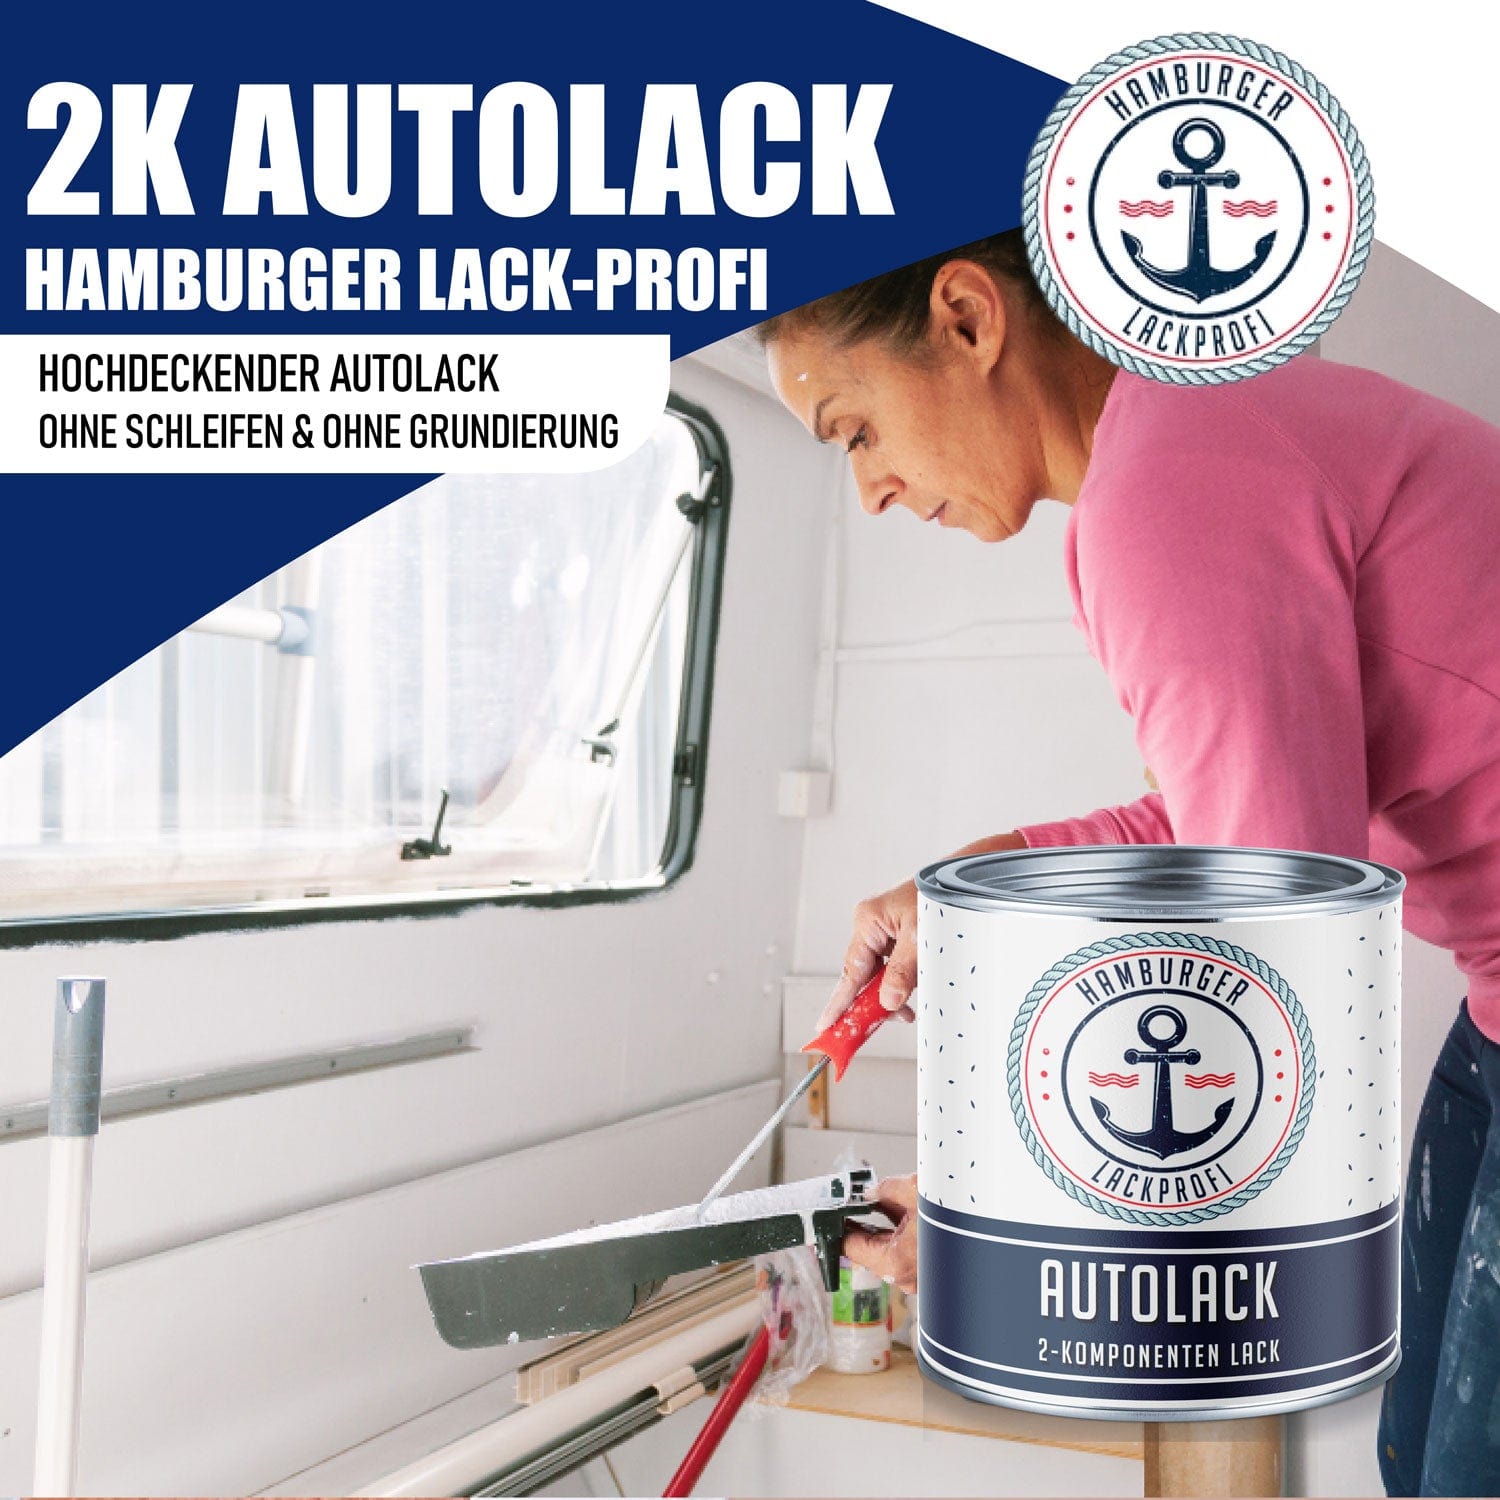 Hamburger Lack-Profi Lacke & Beschichtungen Hamburger Lack-Profi 2K Autolack in Schwarzoliv RAL 6015 mit Lackierset (X300) & Verdünnung (1 L) - 30% Sparangebot